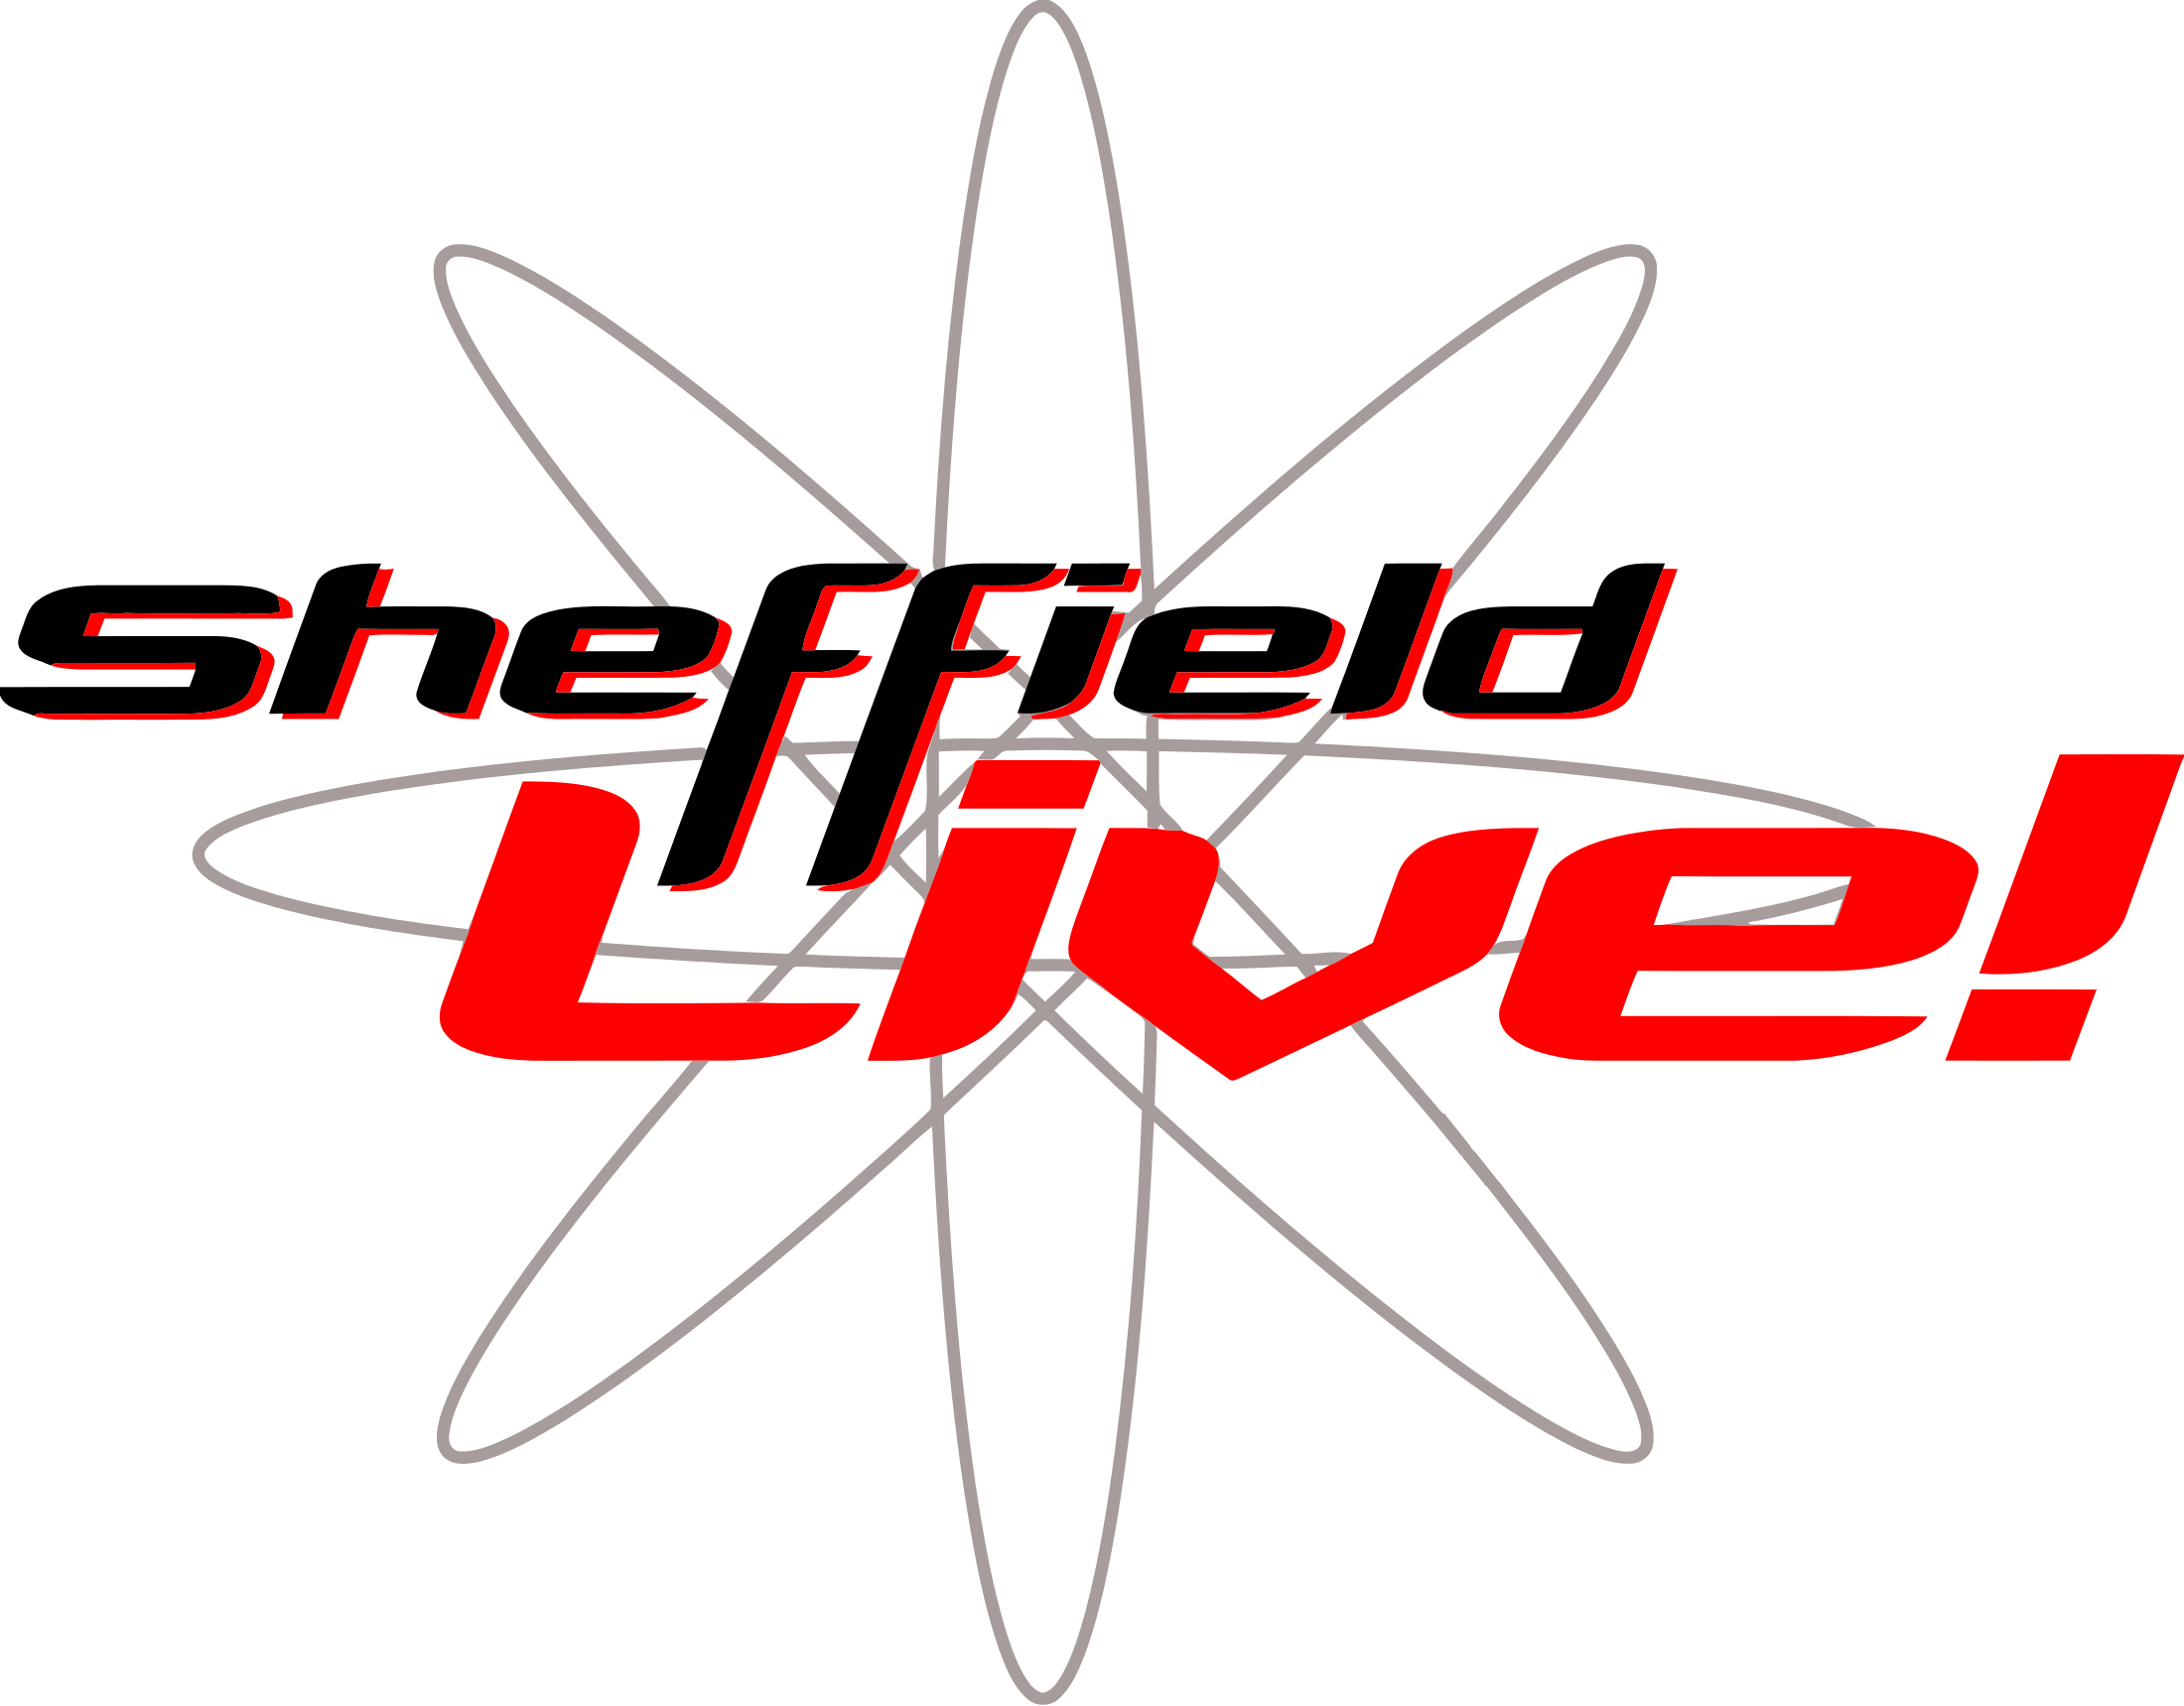 Sheffield Live TV vector Logo